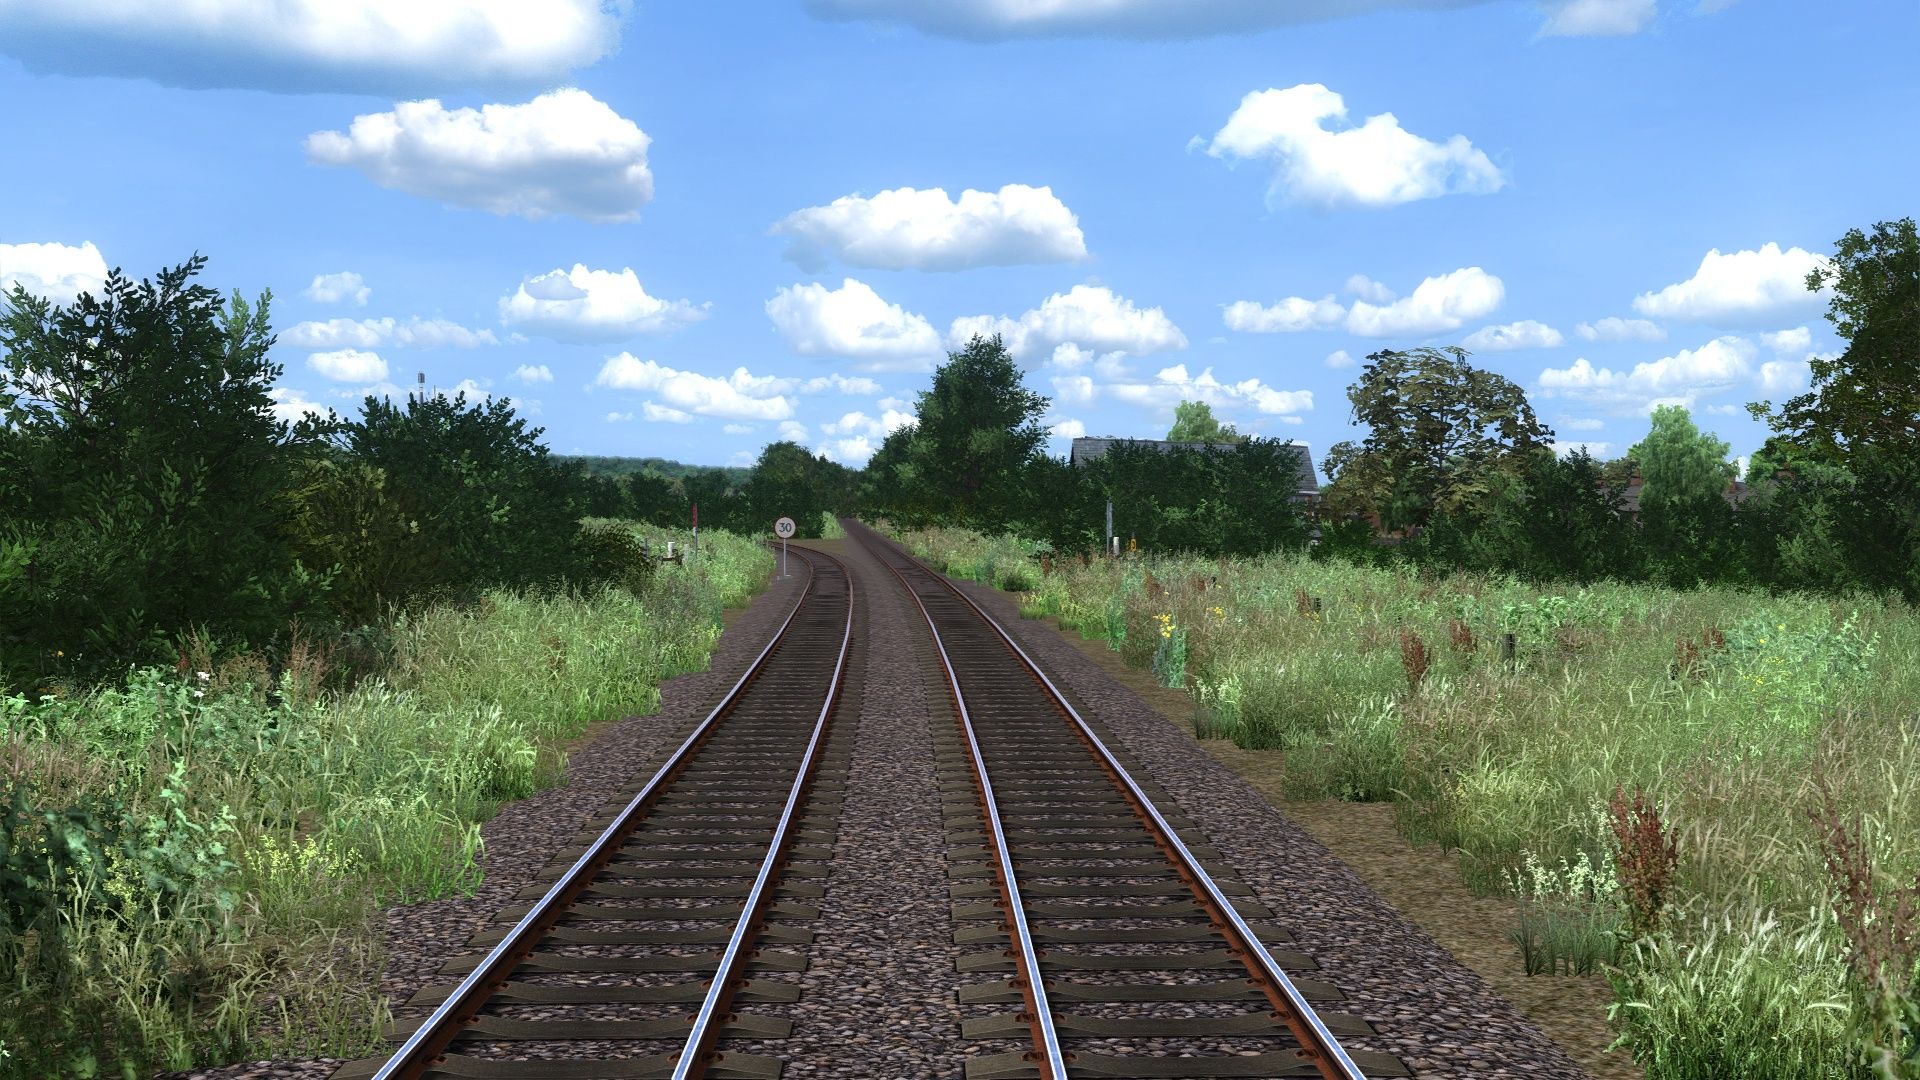 Screenshot_The North Norfolk  Railway - The Poppy Line_52.93181-1.27643_12-02-08.jpg